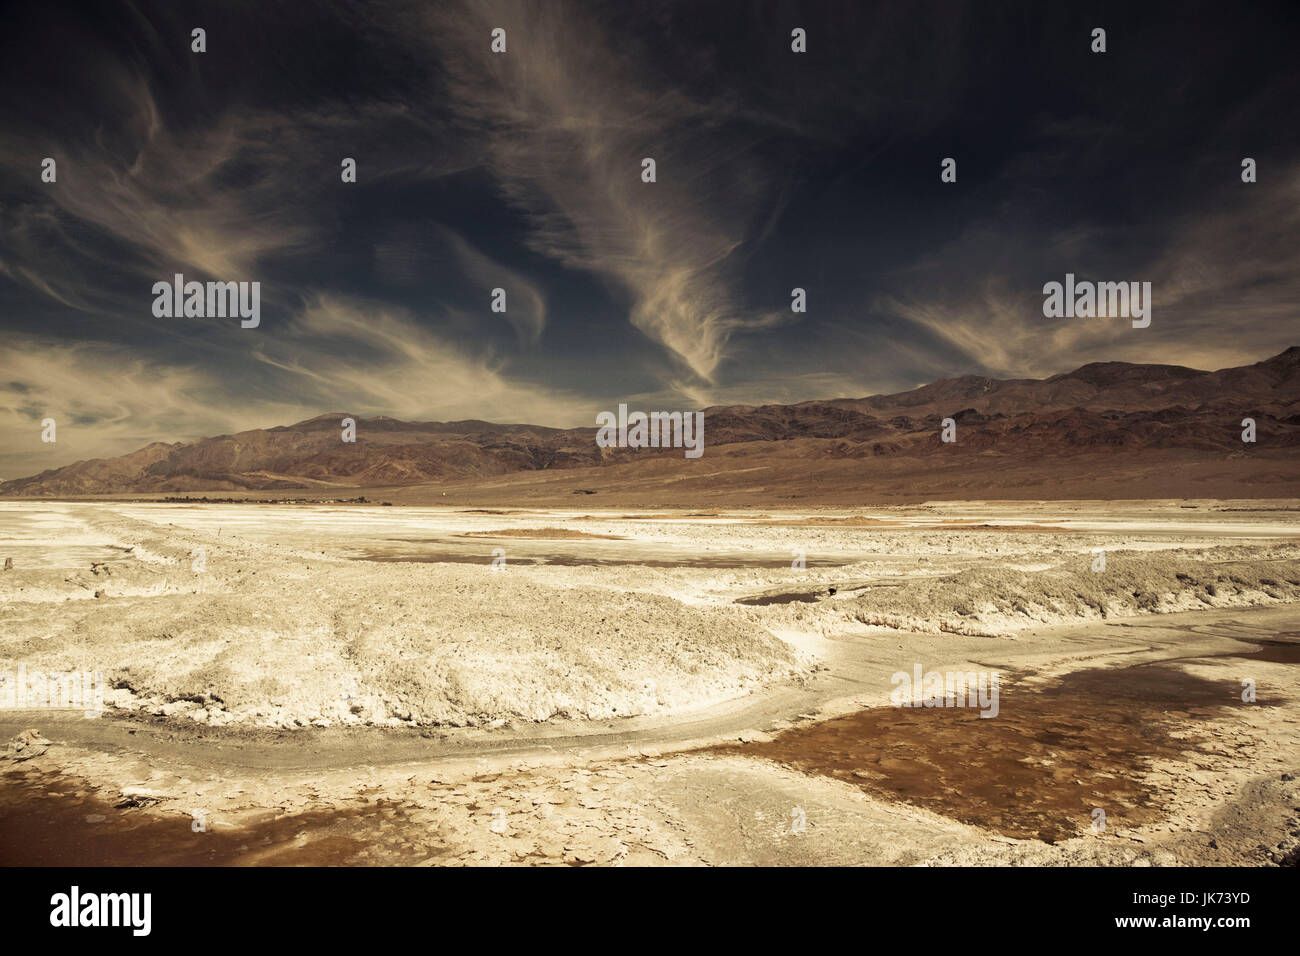 USA, California, Eastern Sierra Nevada Area, Owens Valley, Keeler, mountain landscape and the salt flats of Owens Lake Stock Photo